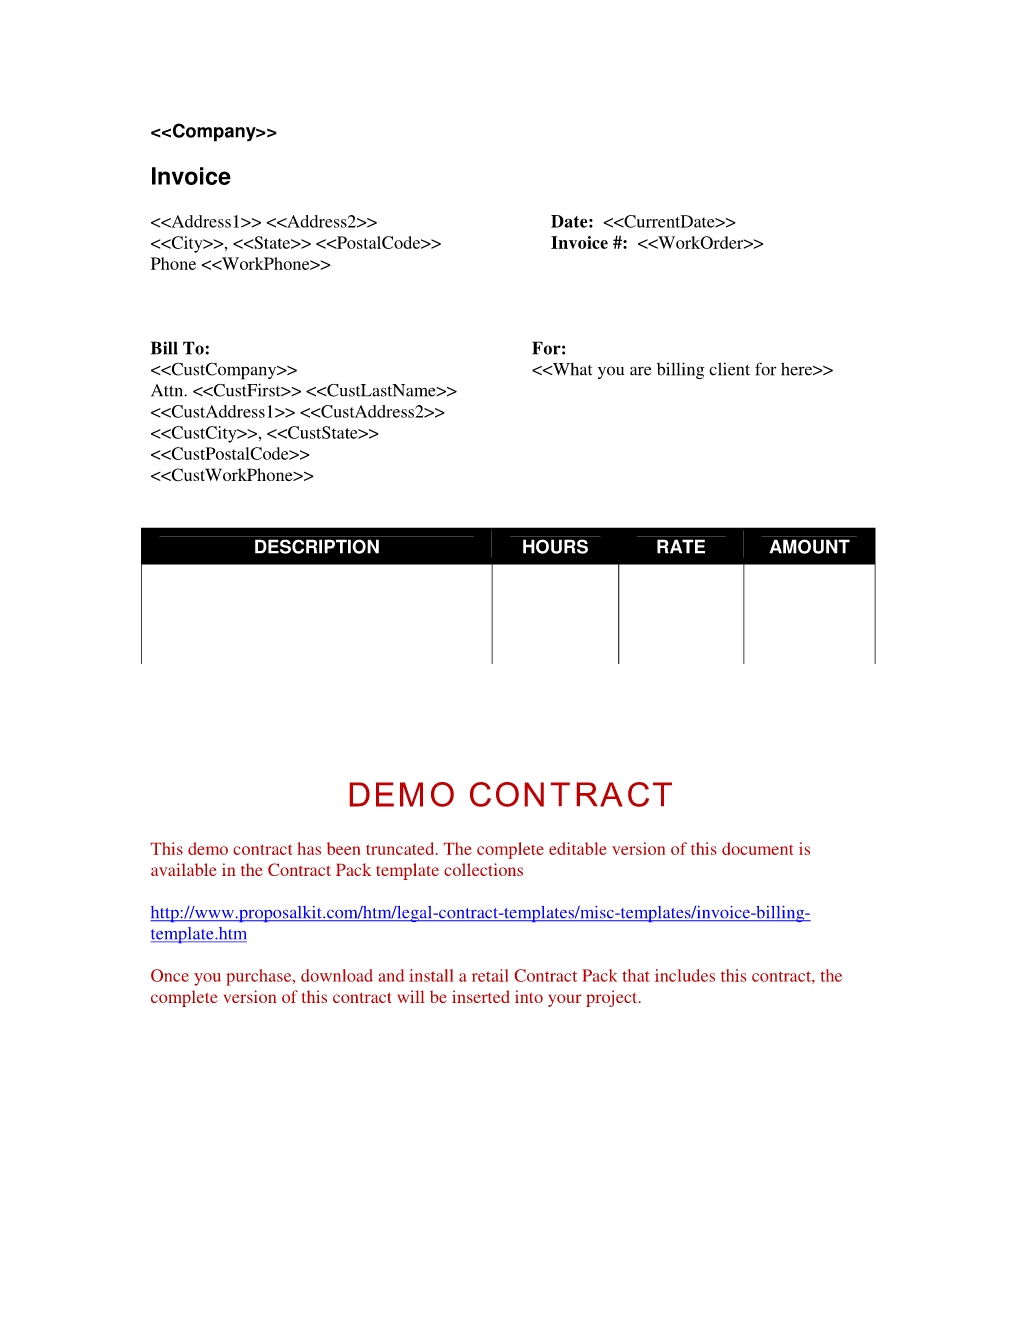 invoice billing template miscellaneous templates legal retainer invoice sample